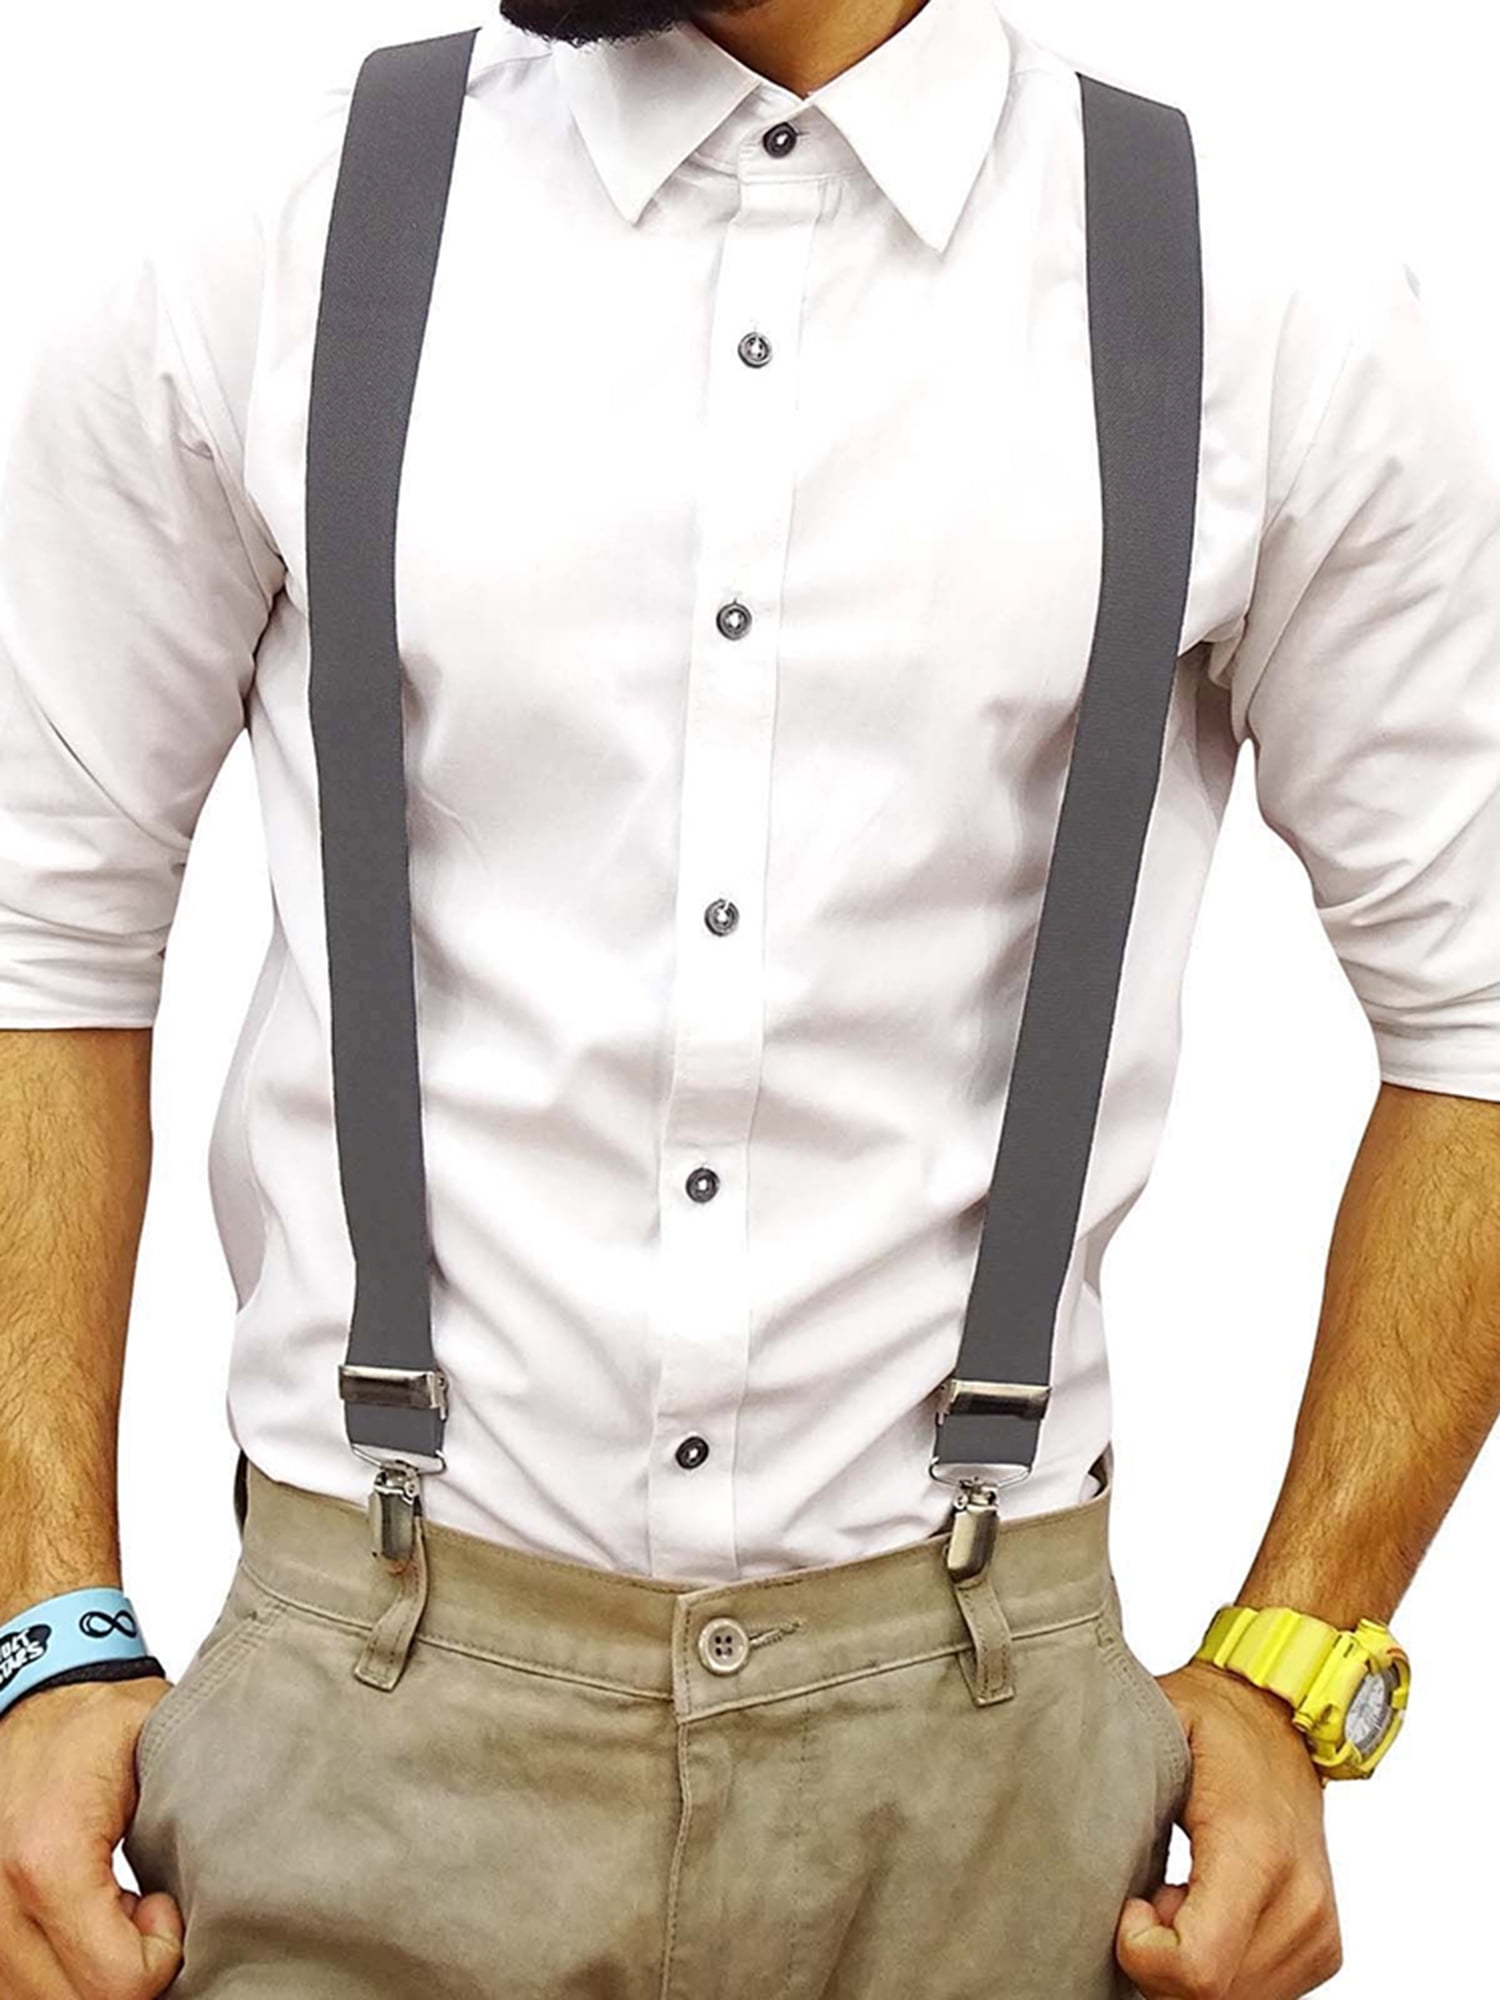 Men's XXL Extra Wide Heavy Duty X-Shape Braces Suspenders with 6 Clips Design 